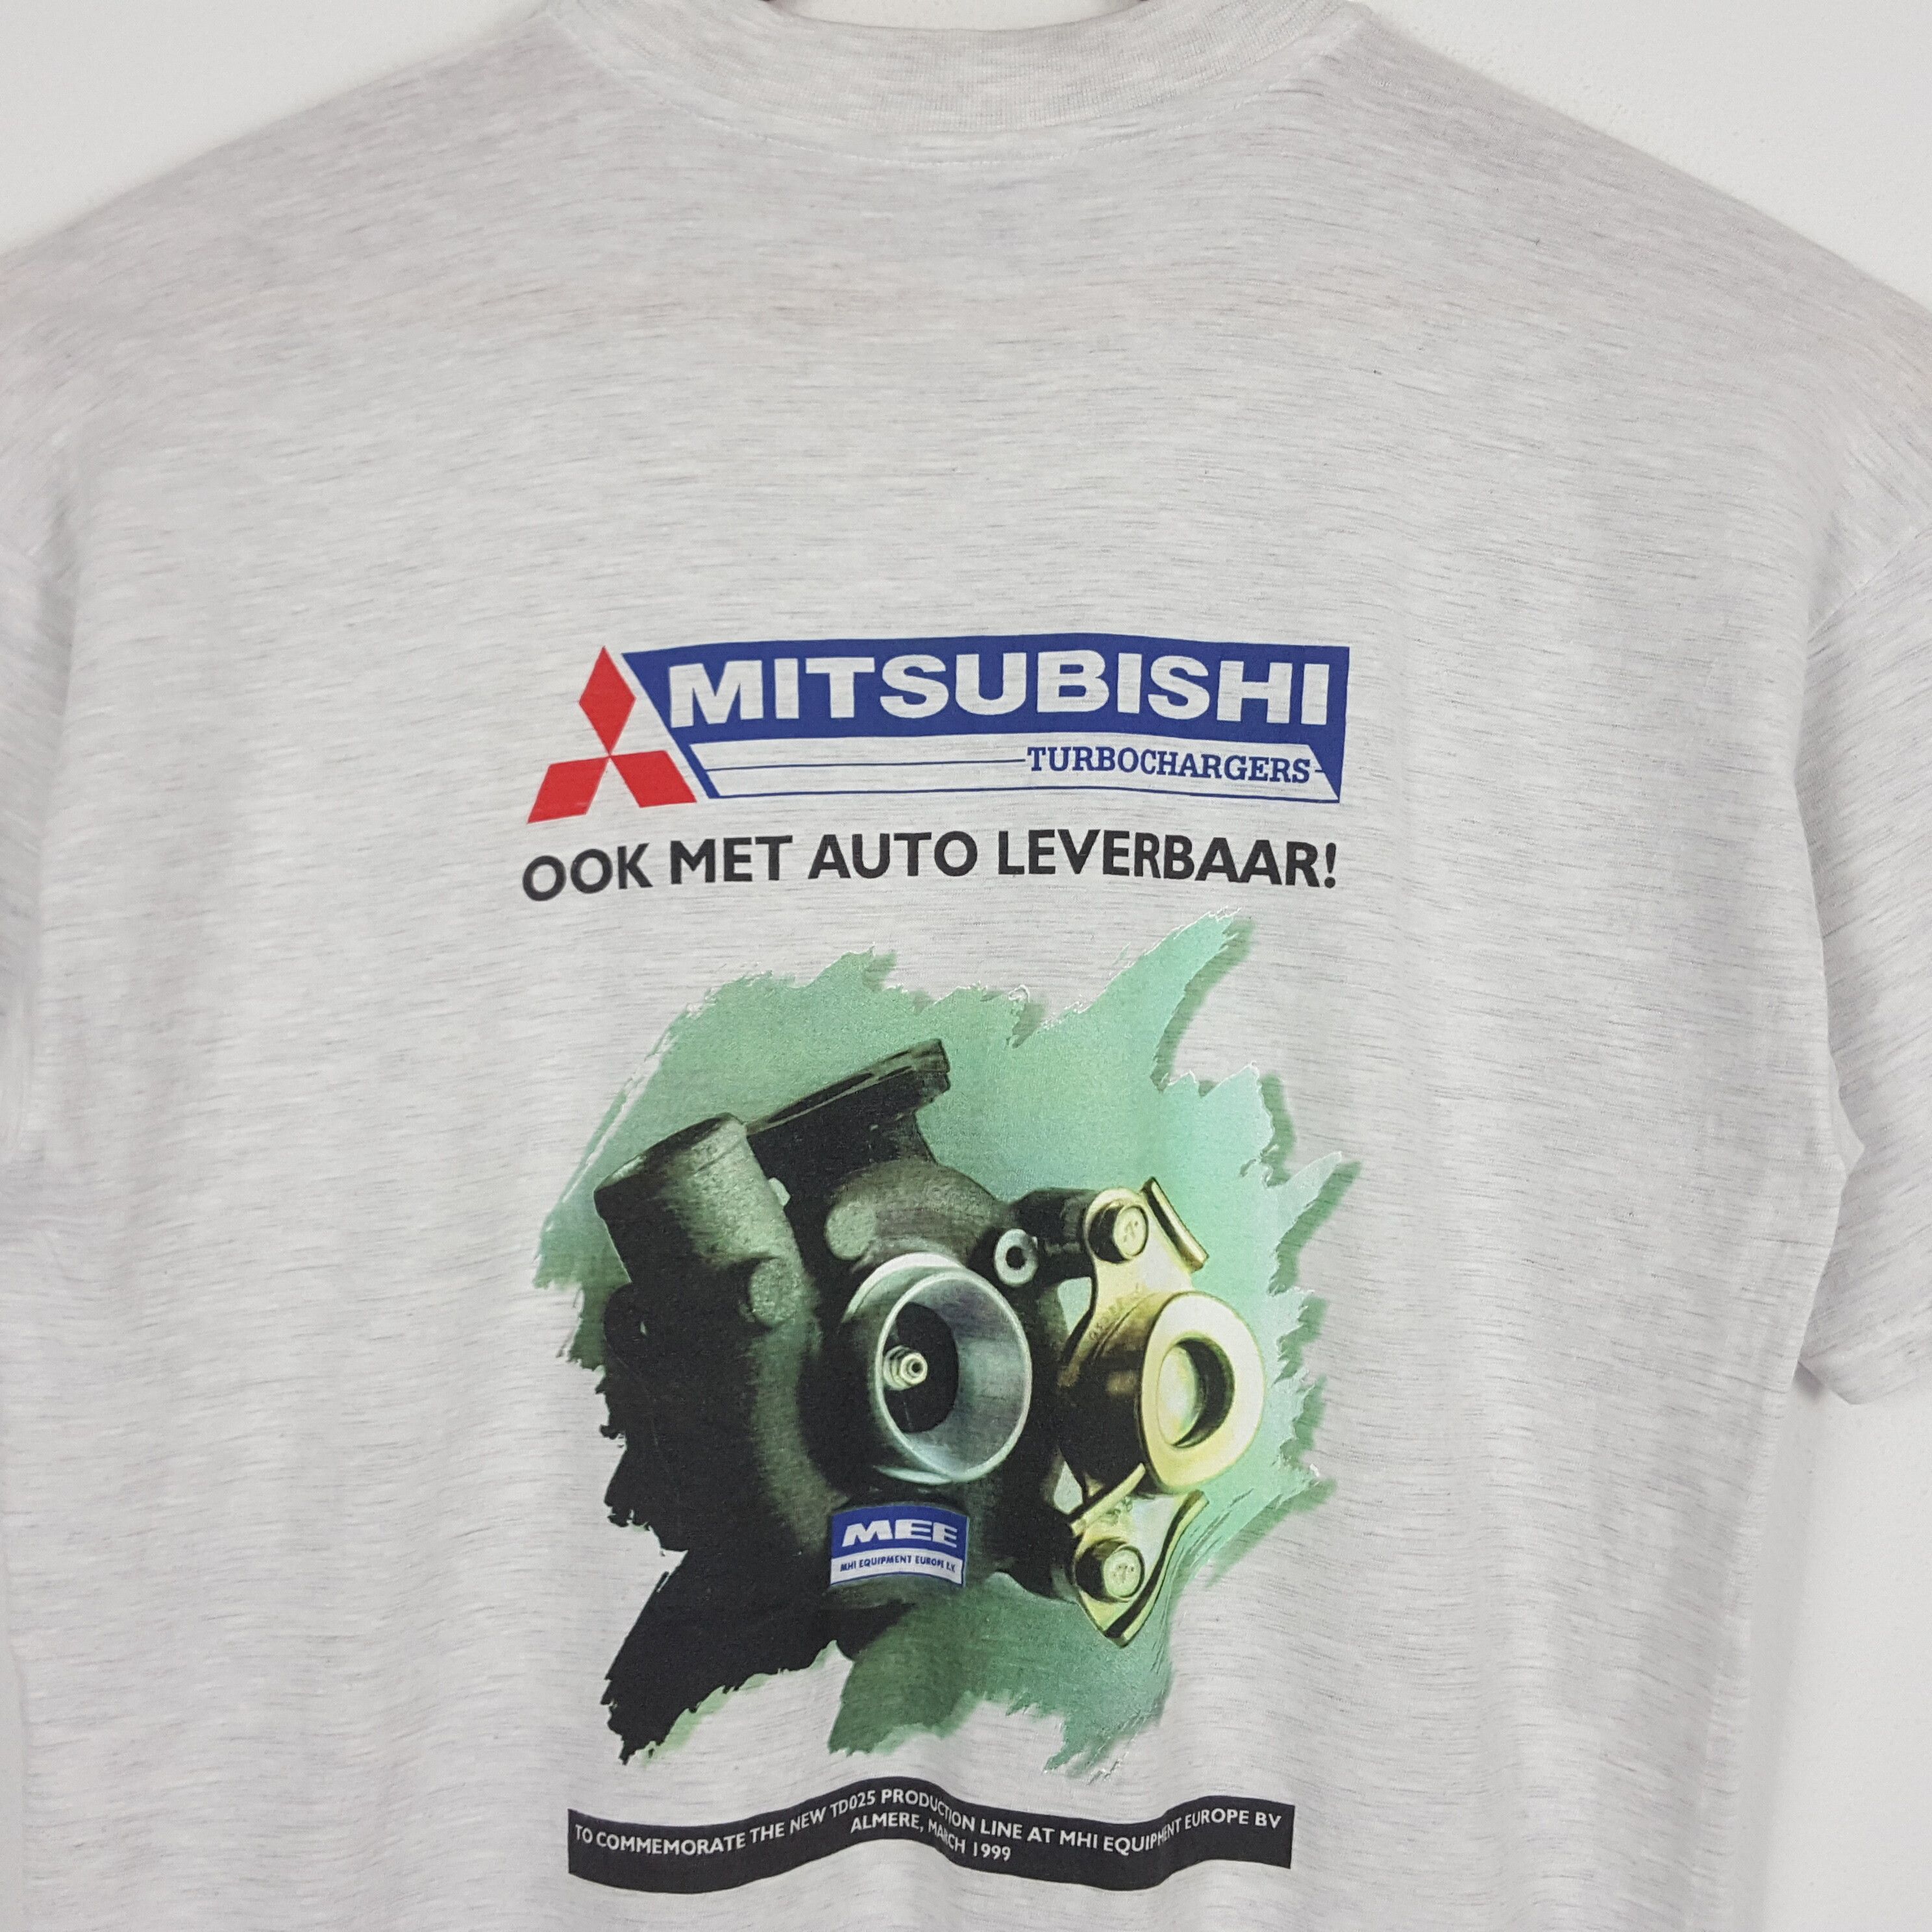 Vintage Vintage Mitsubishi Turbocharger Racing T-Shirt Size US M / EU 48-50 / 2 - 5 Preview